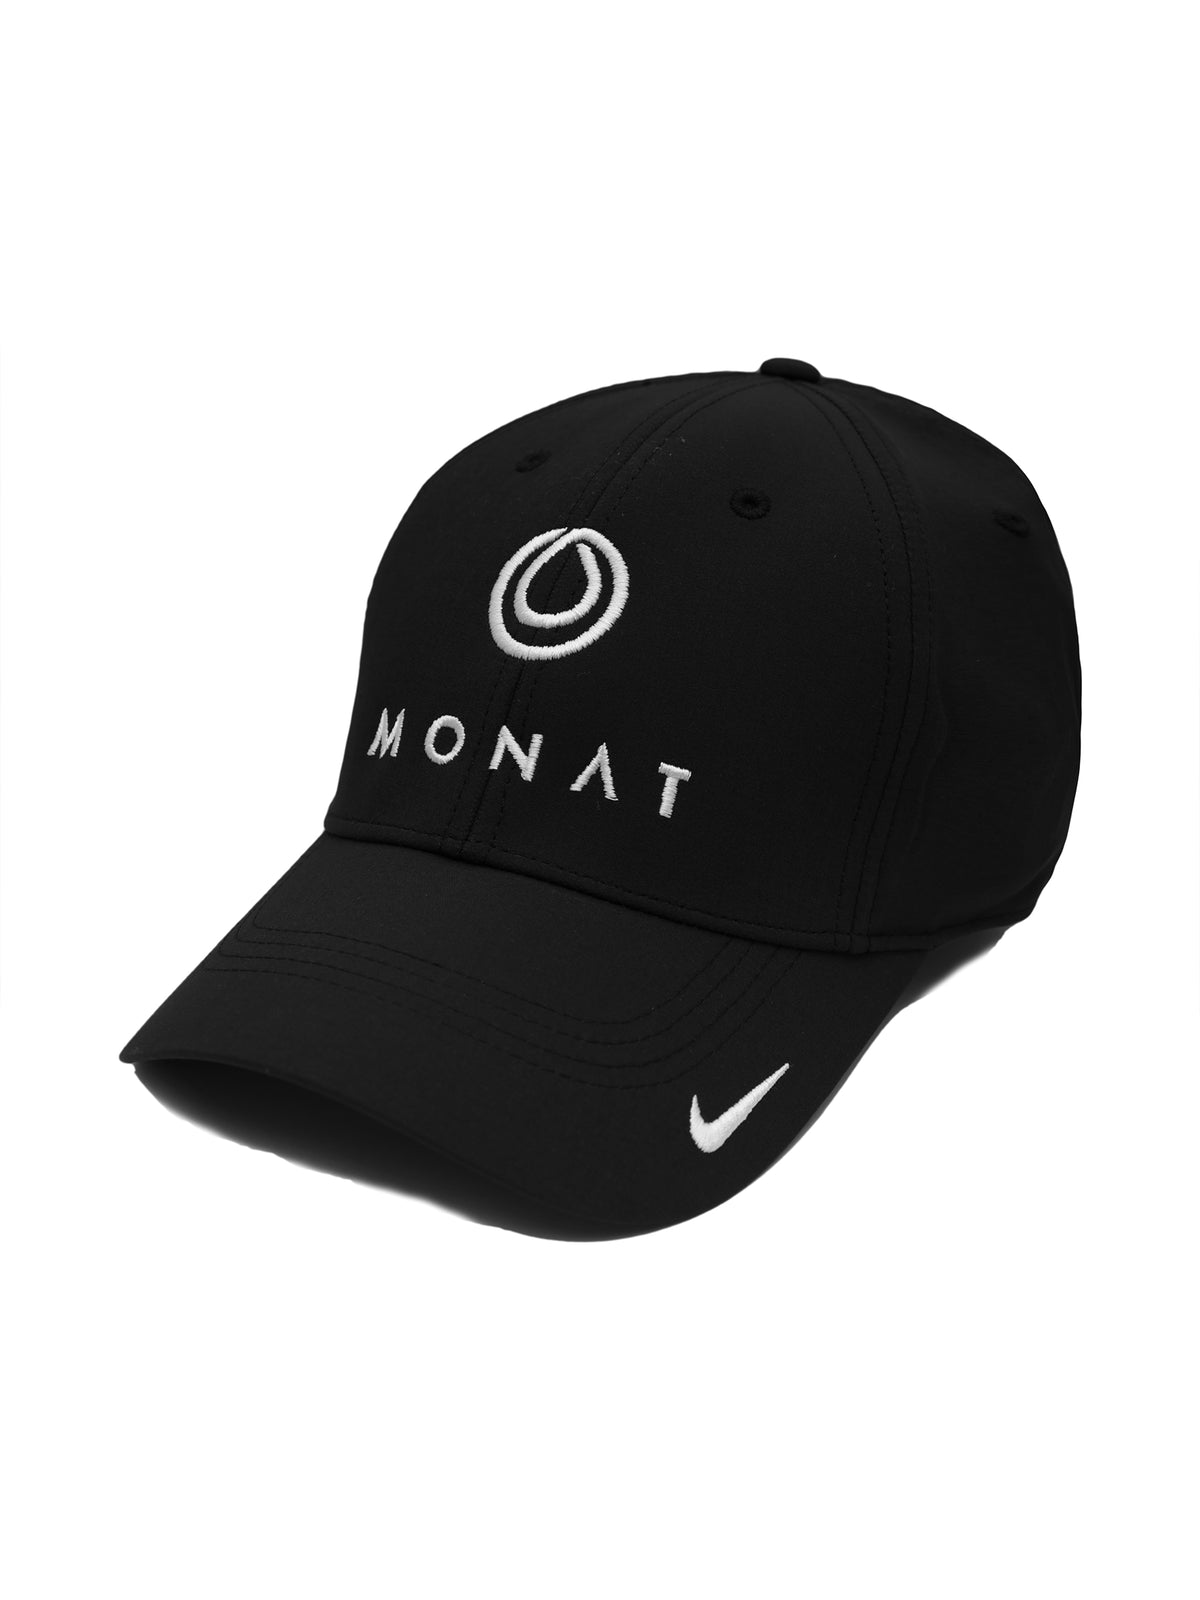 Monat Nike Cap by Monat Gear